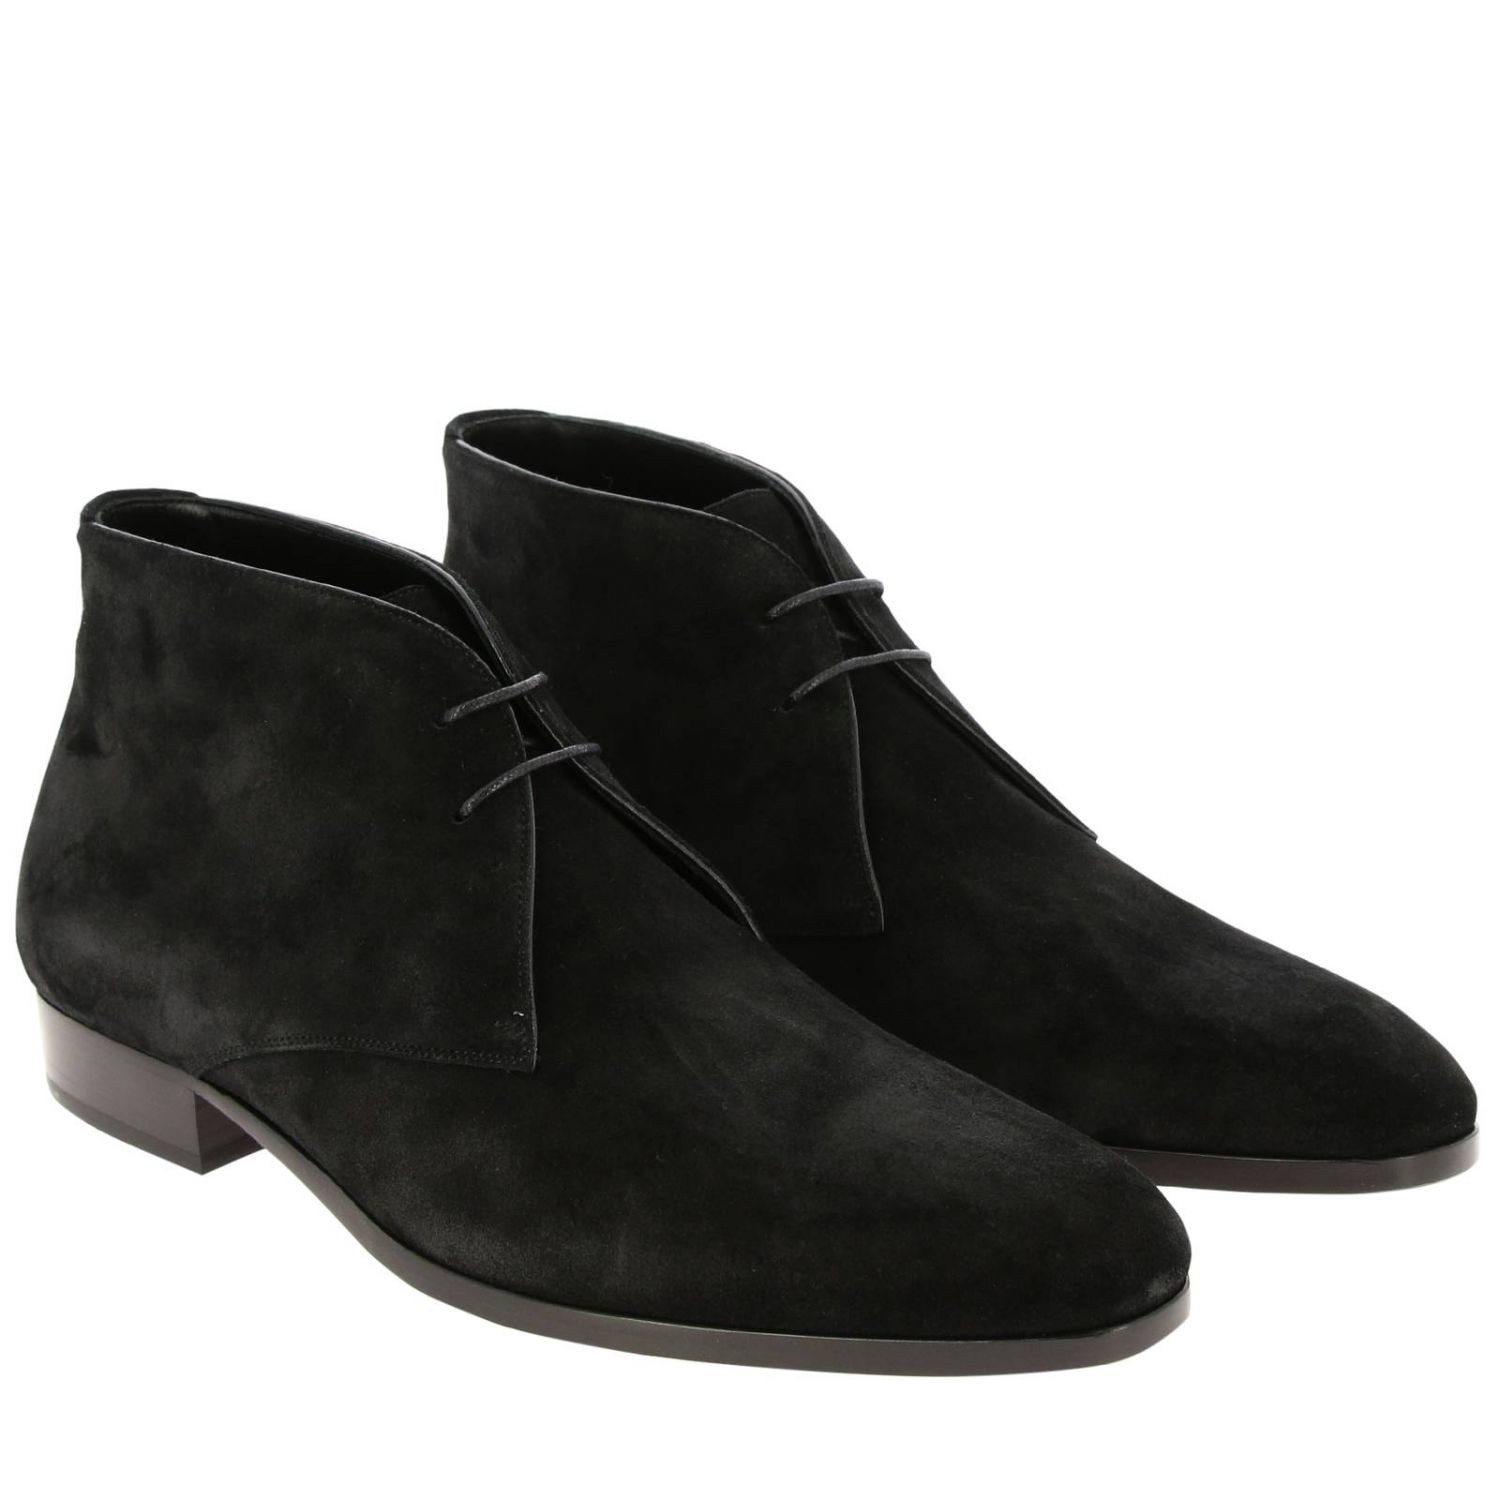 Saint Laurent Outlet: Classic chukka boots in suede - Black | Saint ...